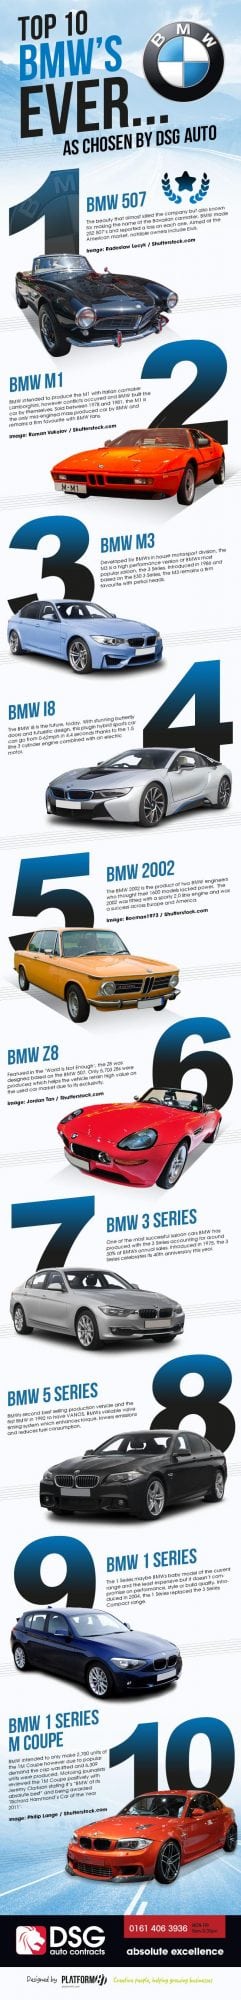 BMW-top-10-cars